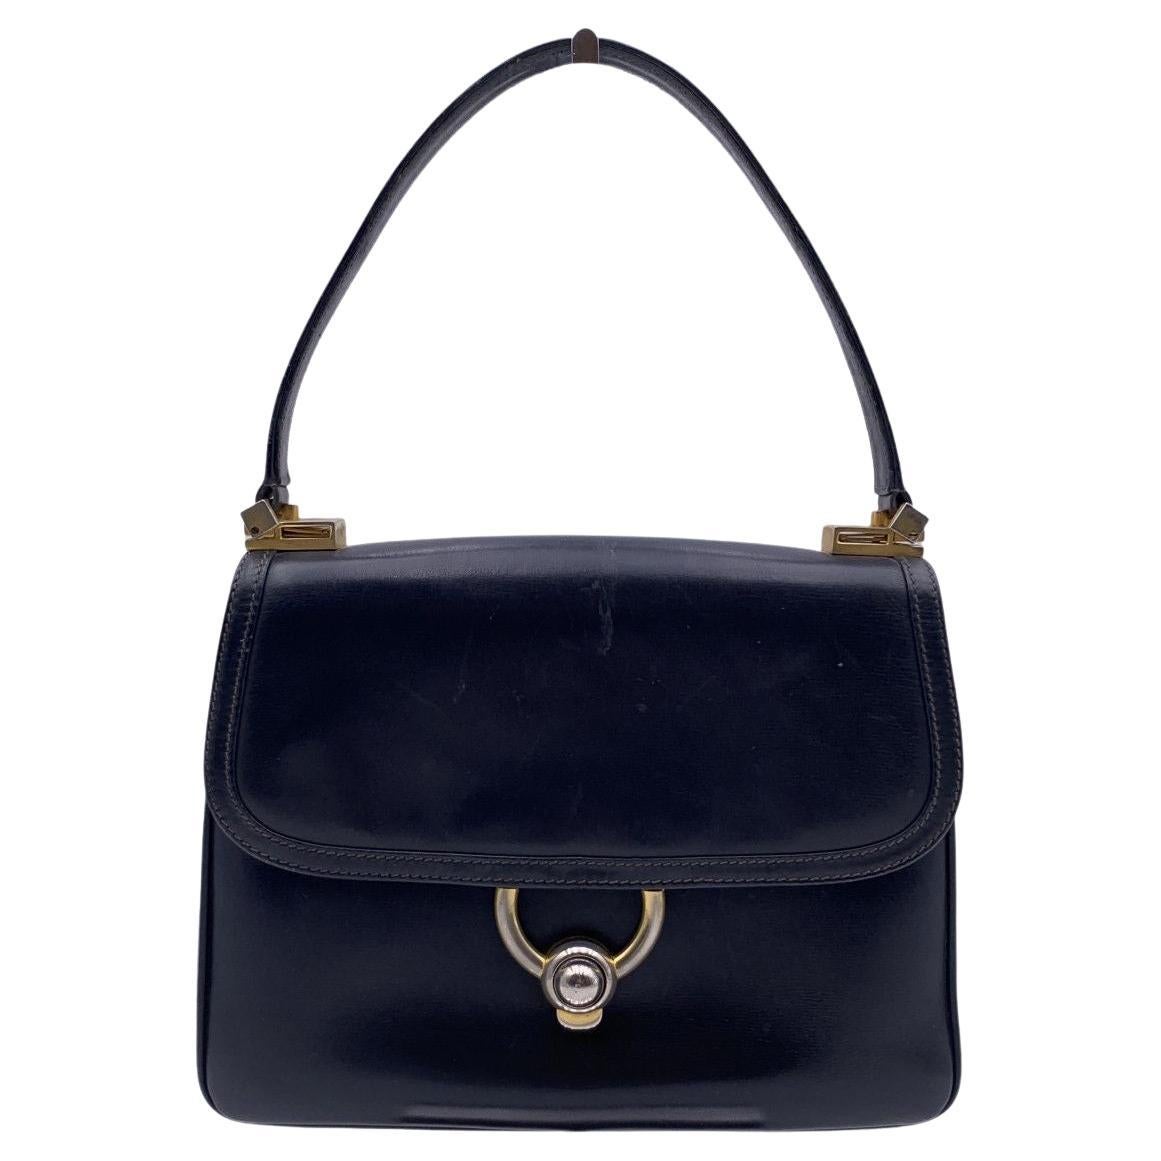 Gucci Vintage Navy Blue Leather Flap Handbag Top Handle Bag